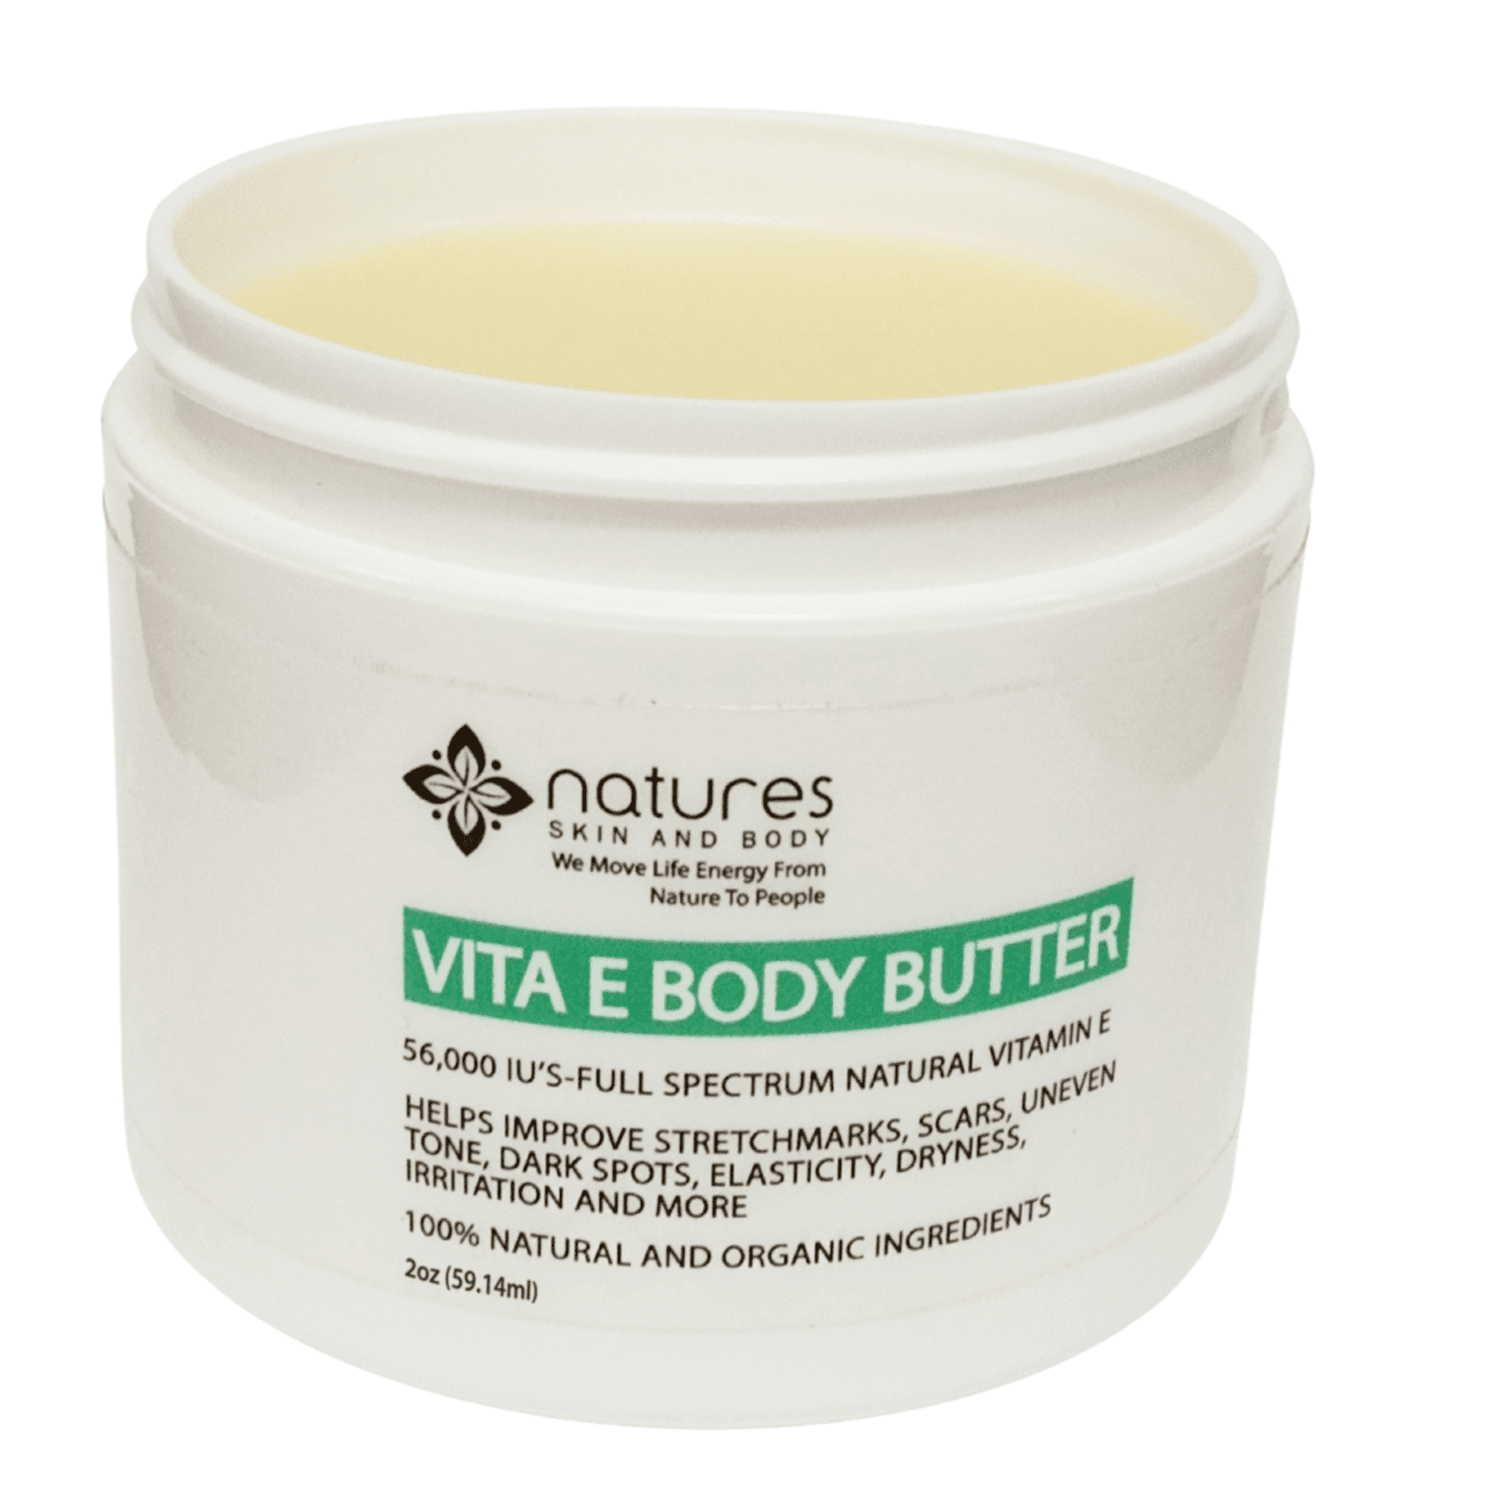 vita-e-intense-moisturizing-megadose-vitamin-e-body-butter-56-000-iu-s-full-spectrum-natural-vitamin-e-improves-stretchmarks-scars-dark-spots-and-more-imparts-every-benefit-of-vitamin-e-anywhere-applied-2oz